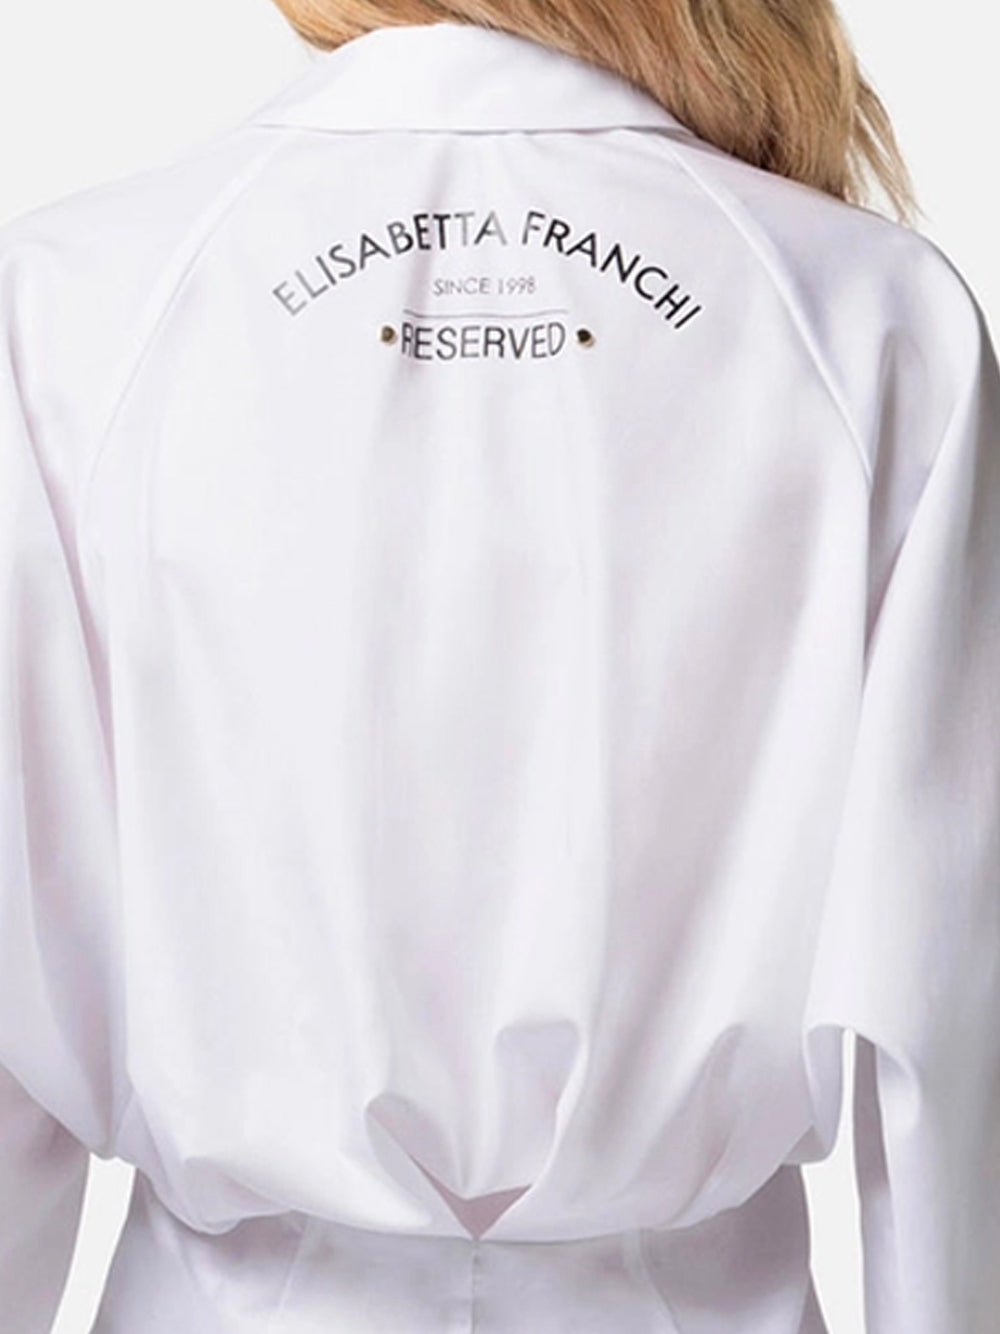 ELISABETTA FRANCHI Camicia Logo Retro-Bianco